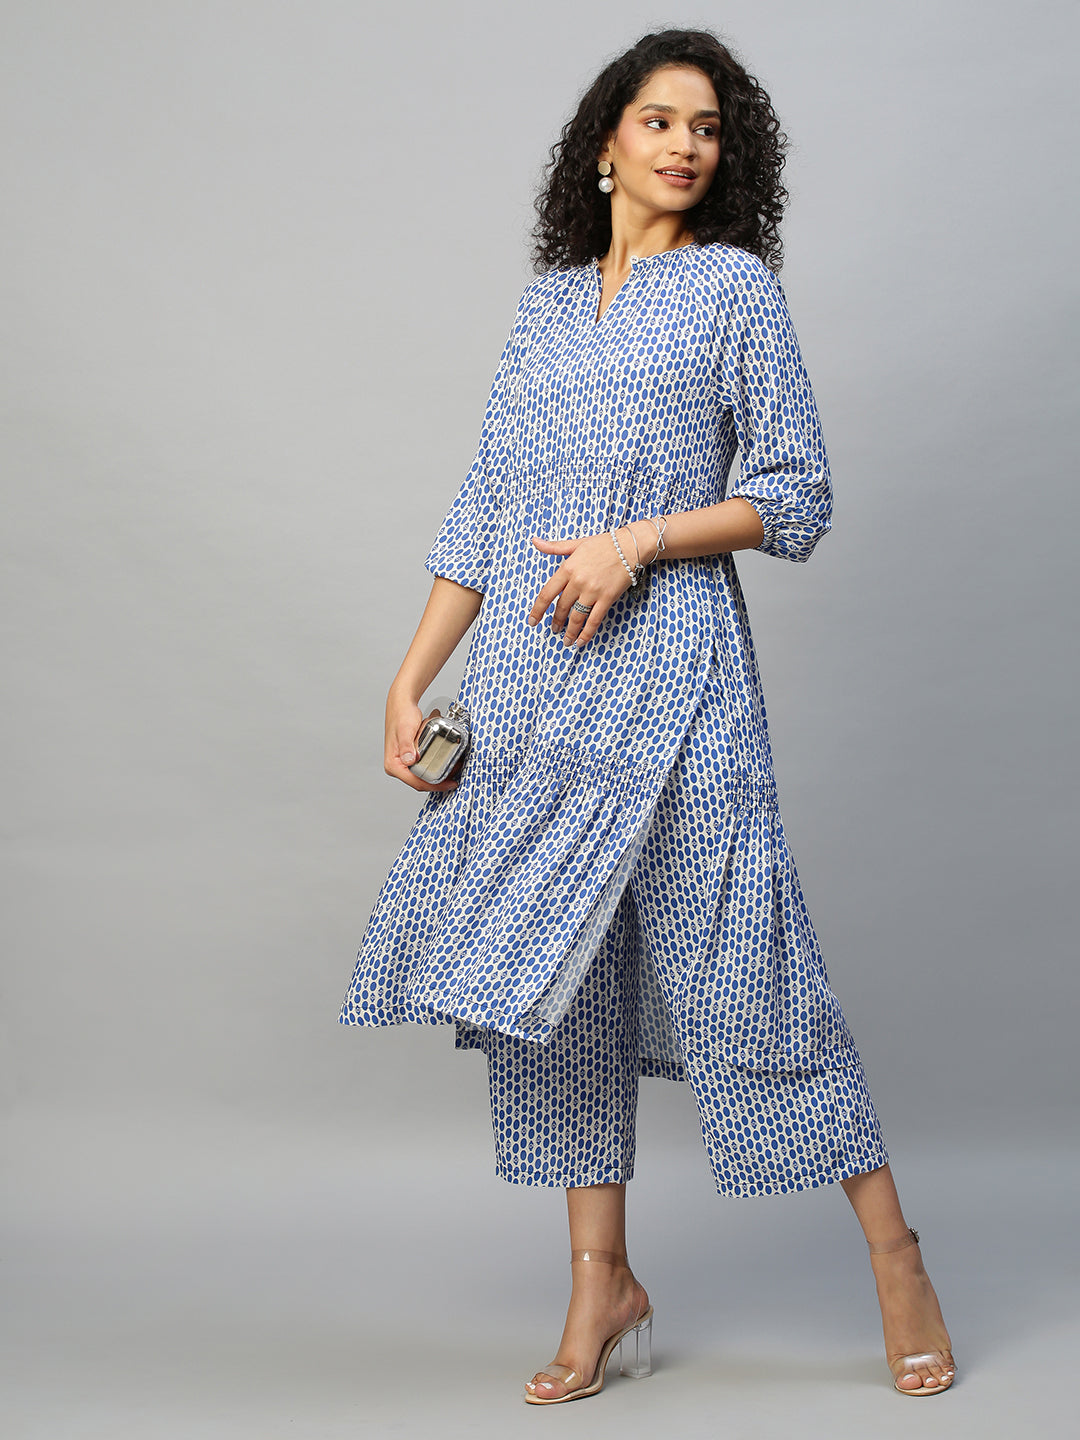 Latest Indian Saree And Dresses - Modern Fashion Kurti Designs 2018  https://youtu.be/gXbpXVaBX-g | Facebook